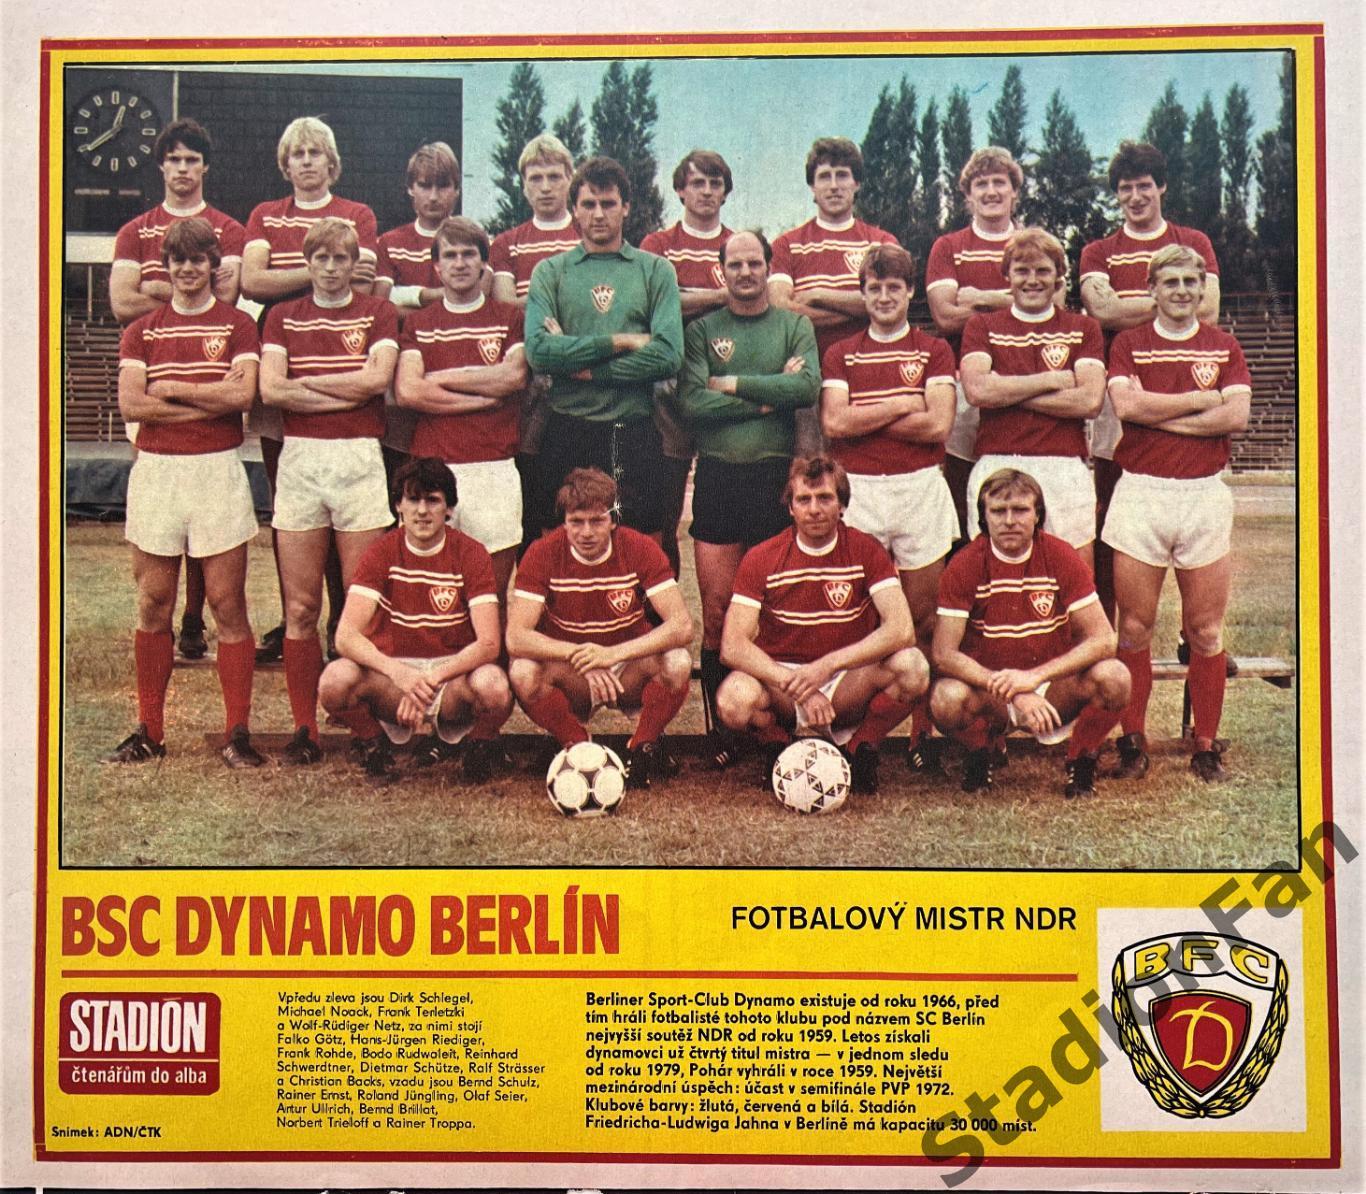 Постер из журнала Стадион (Stadion) - Dynamo Berlin, 1983.